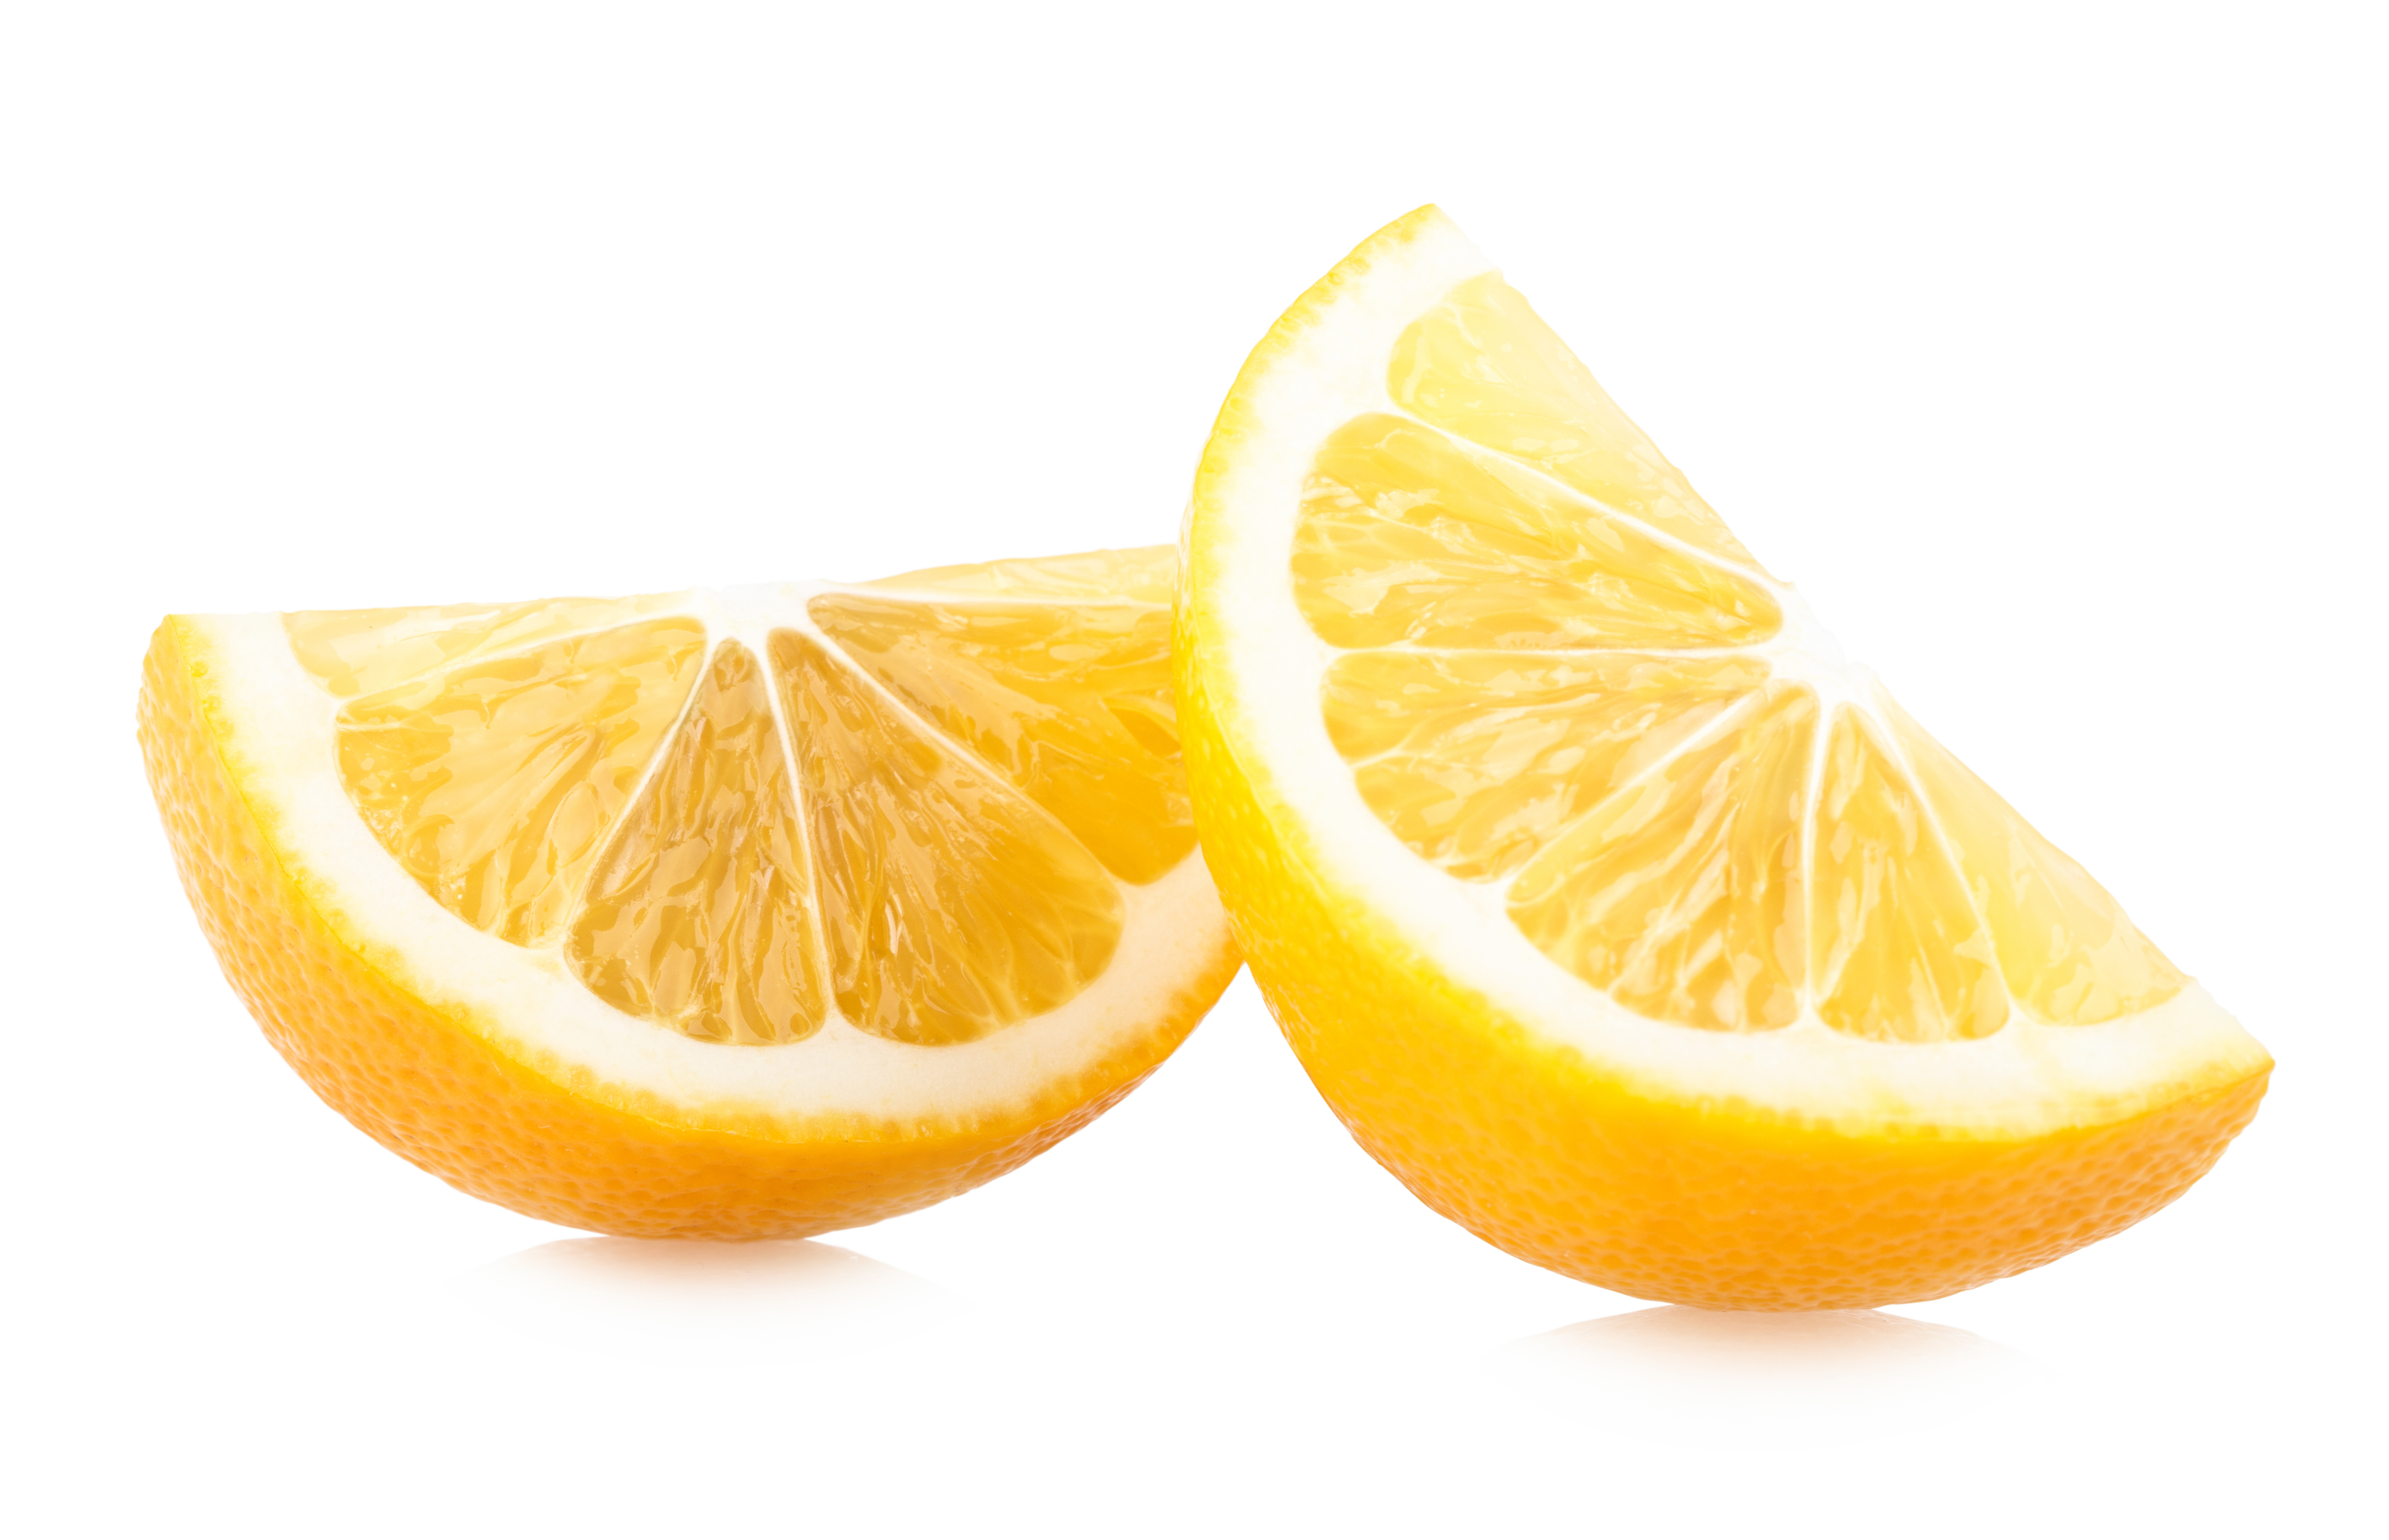 Lemon slices photo